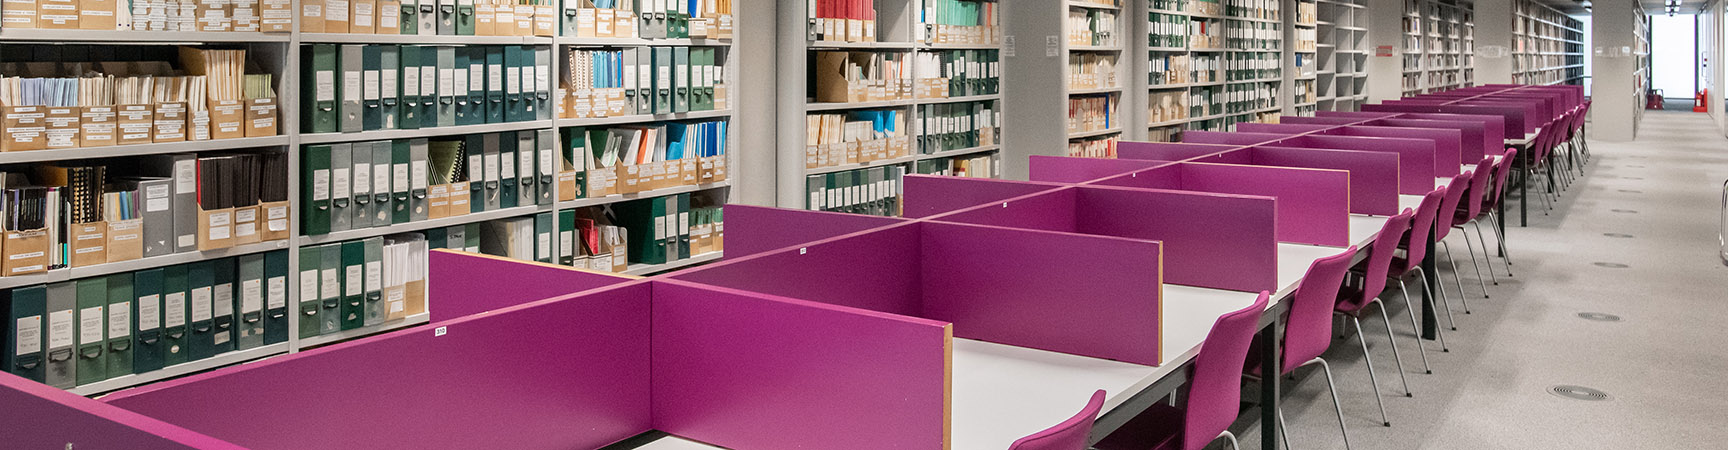 Rows of desks with purple separators between them